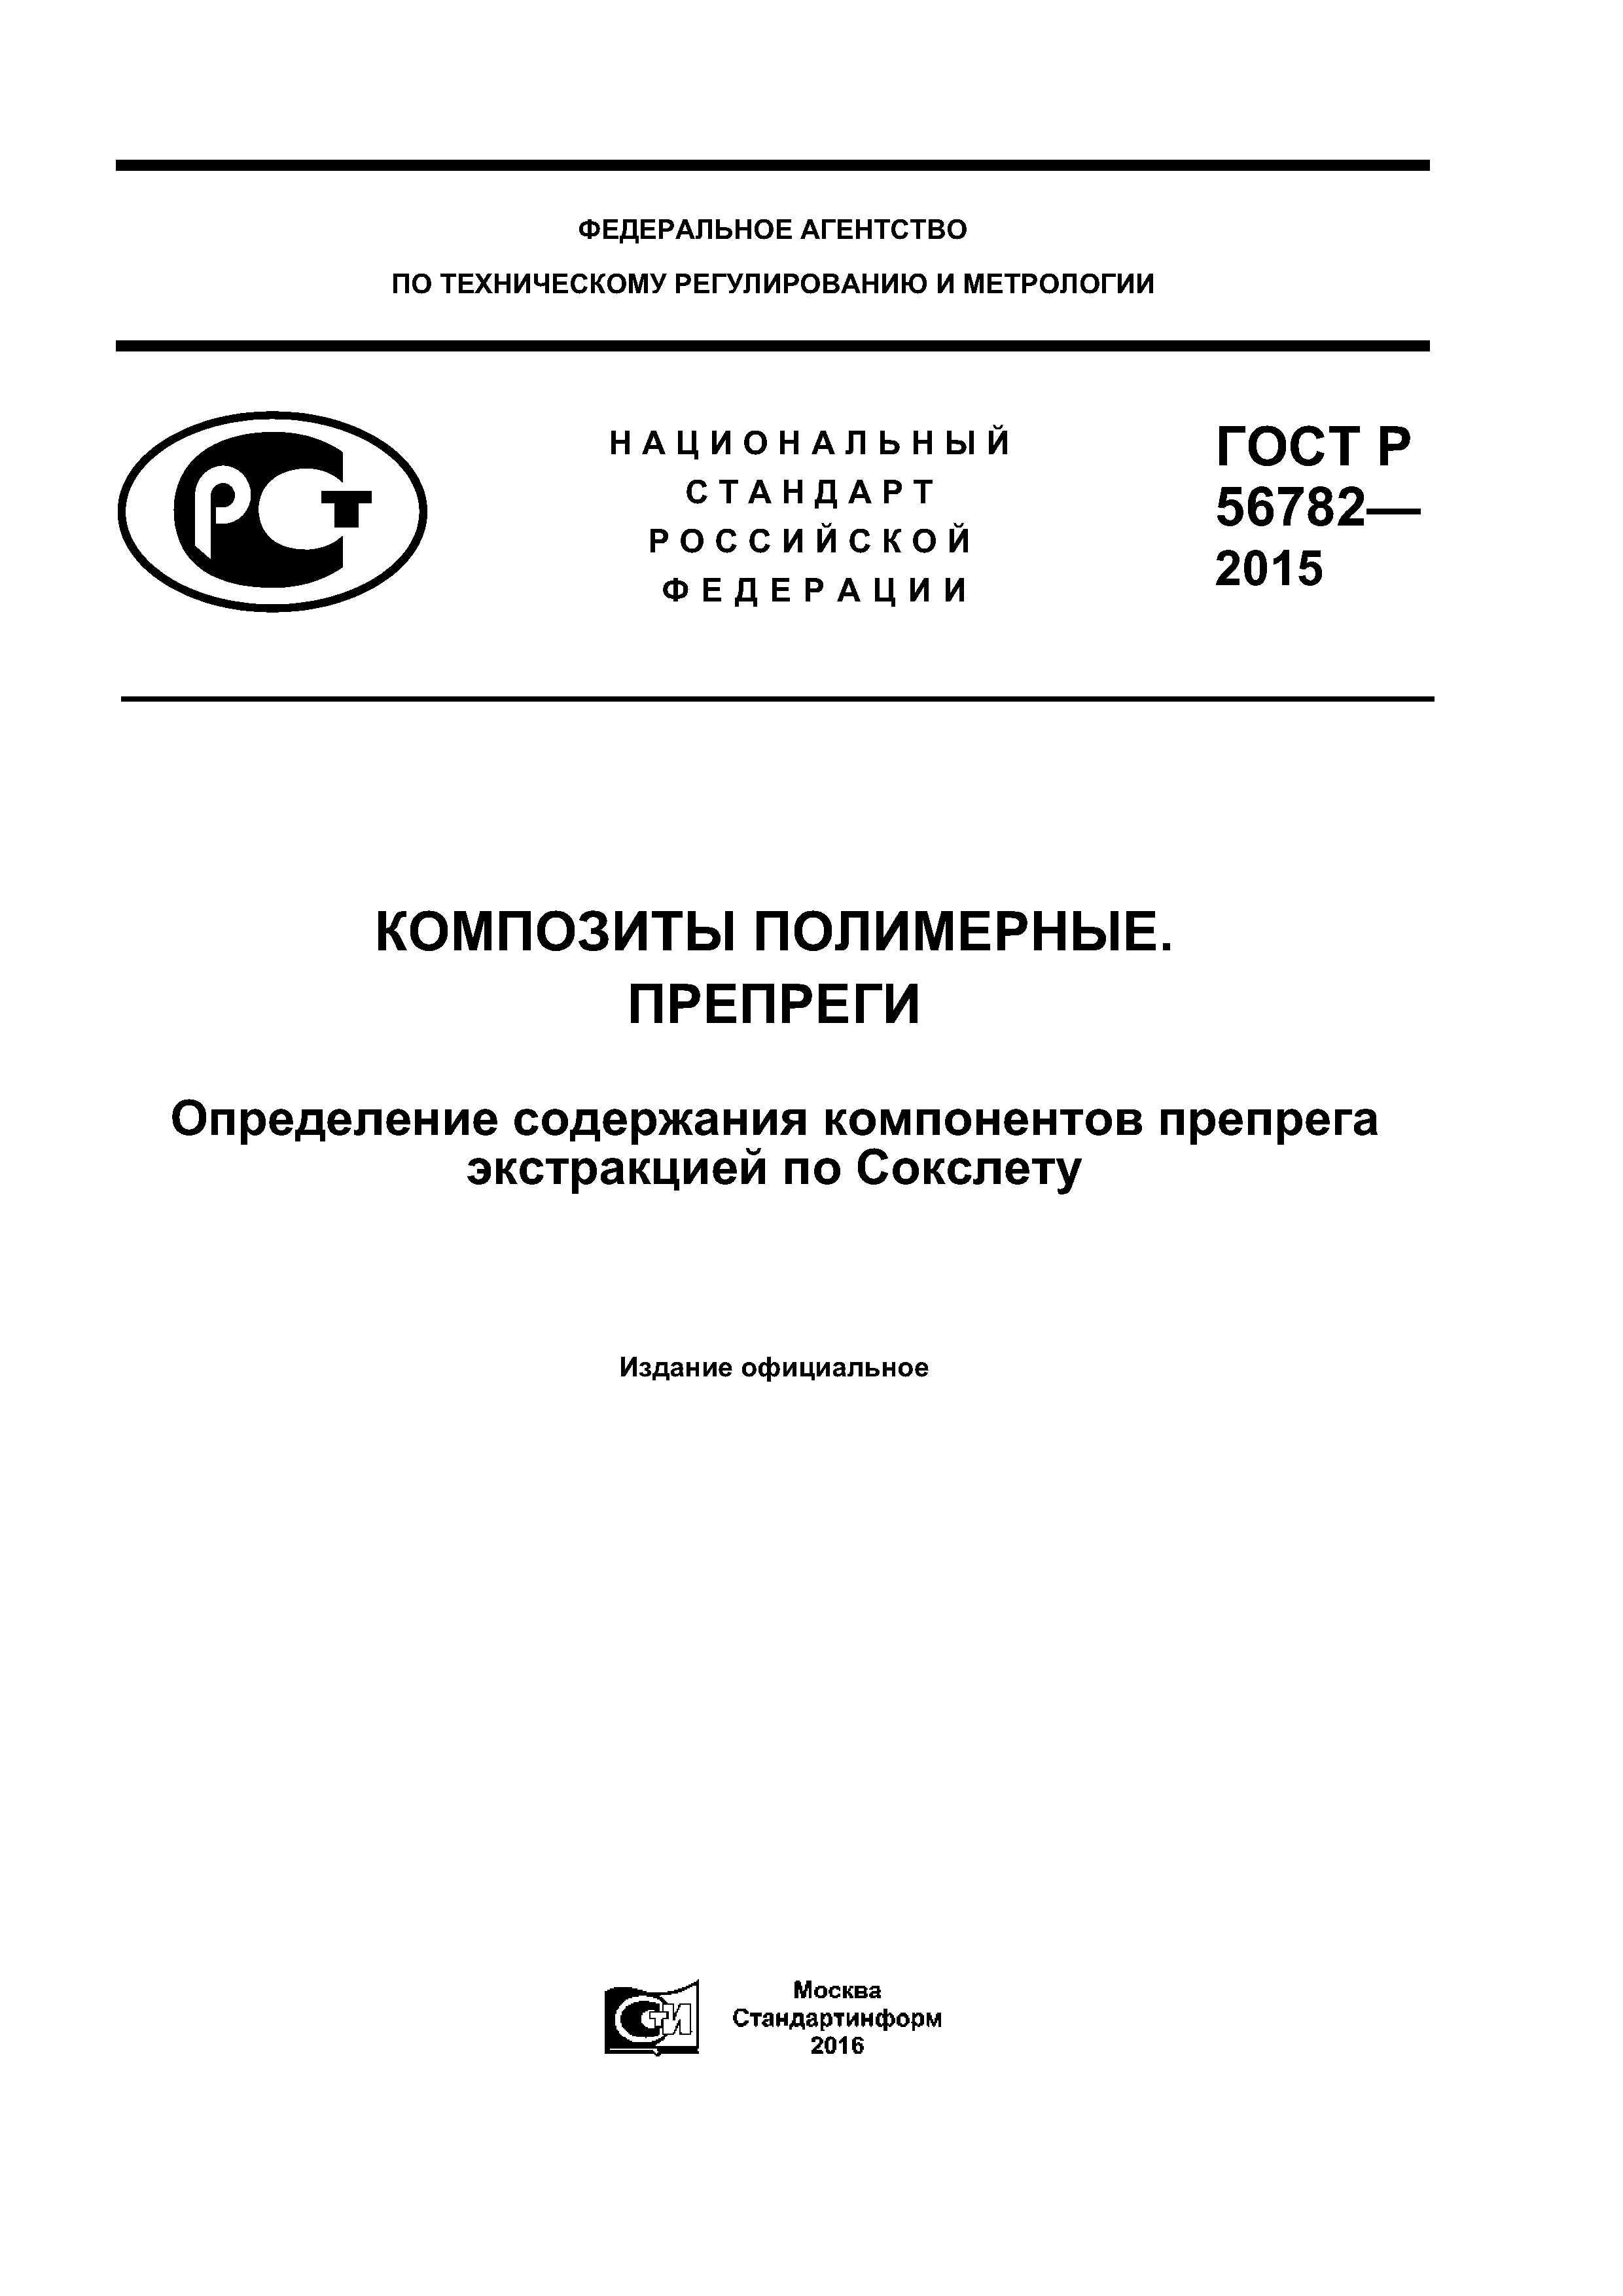 ГОСТ Р 56782-2015